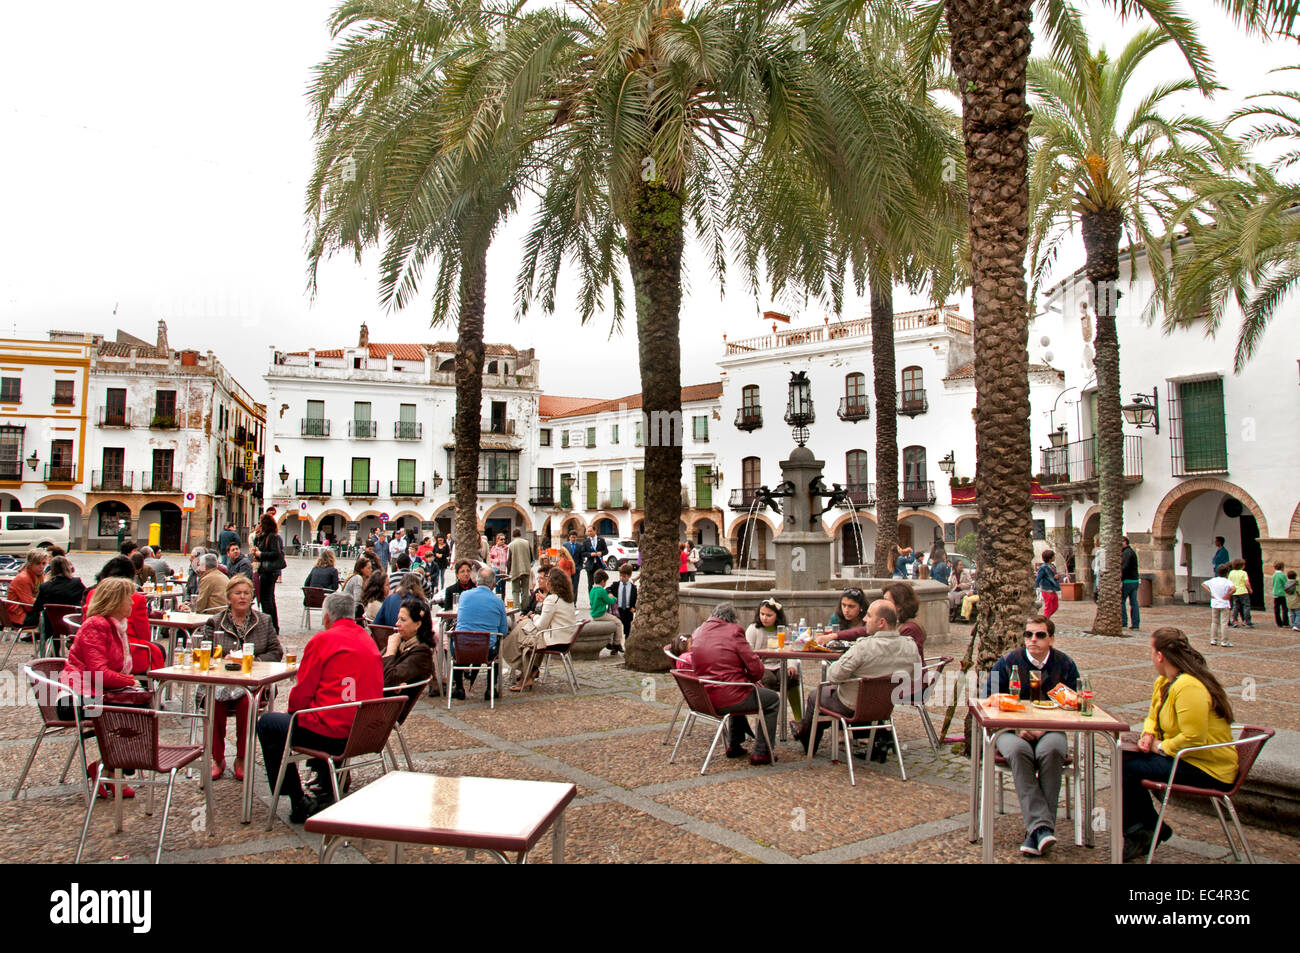 Plaza Grande. 16e siècle Zafra (Badajoz). Espagnol Espagne Banque D'Images